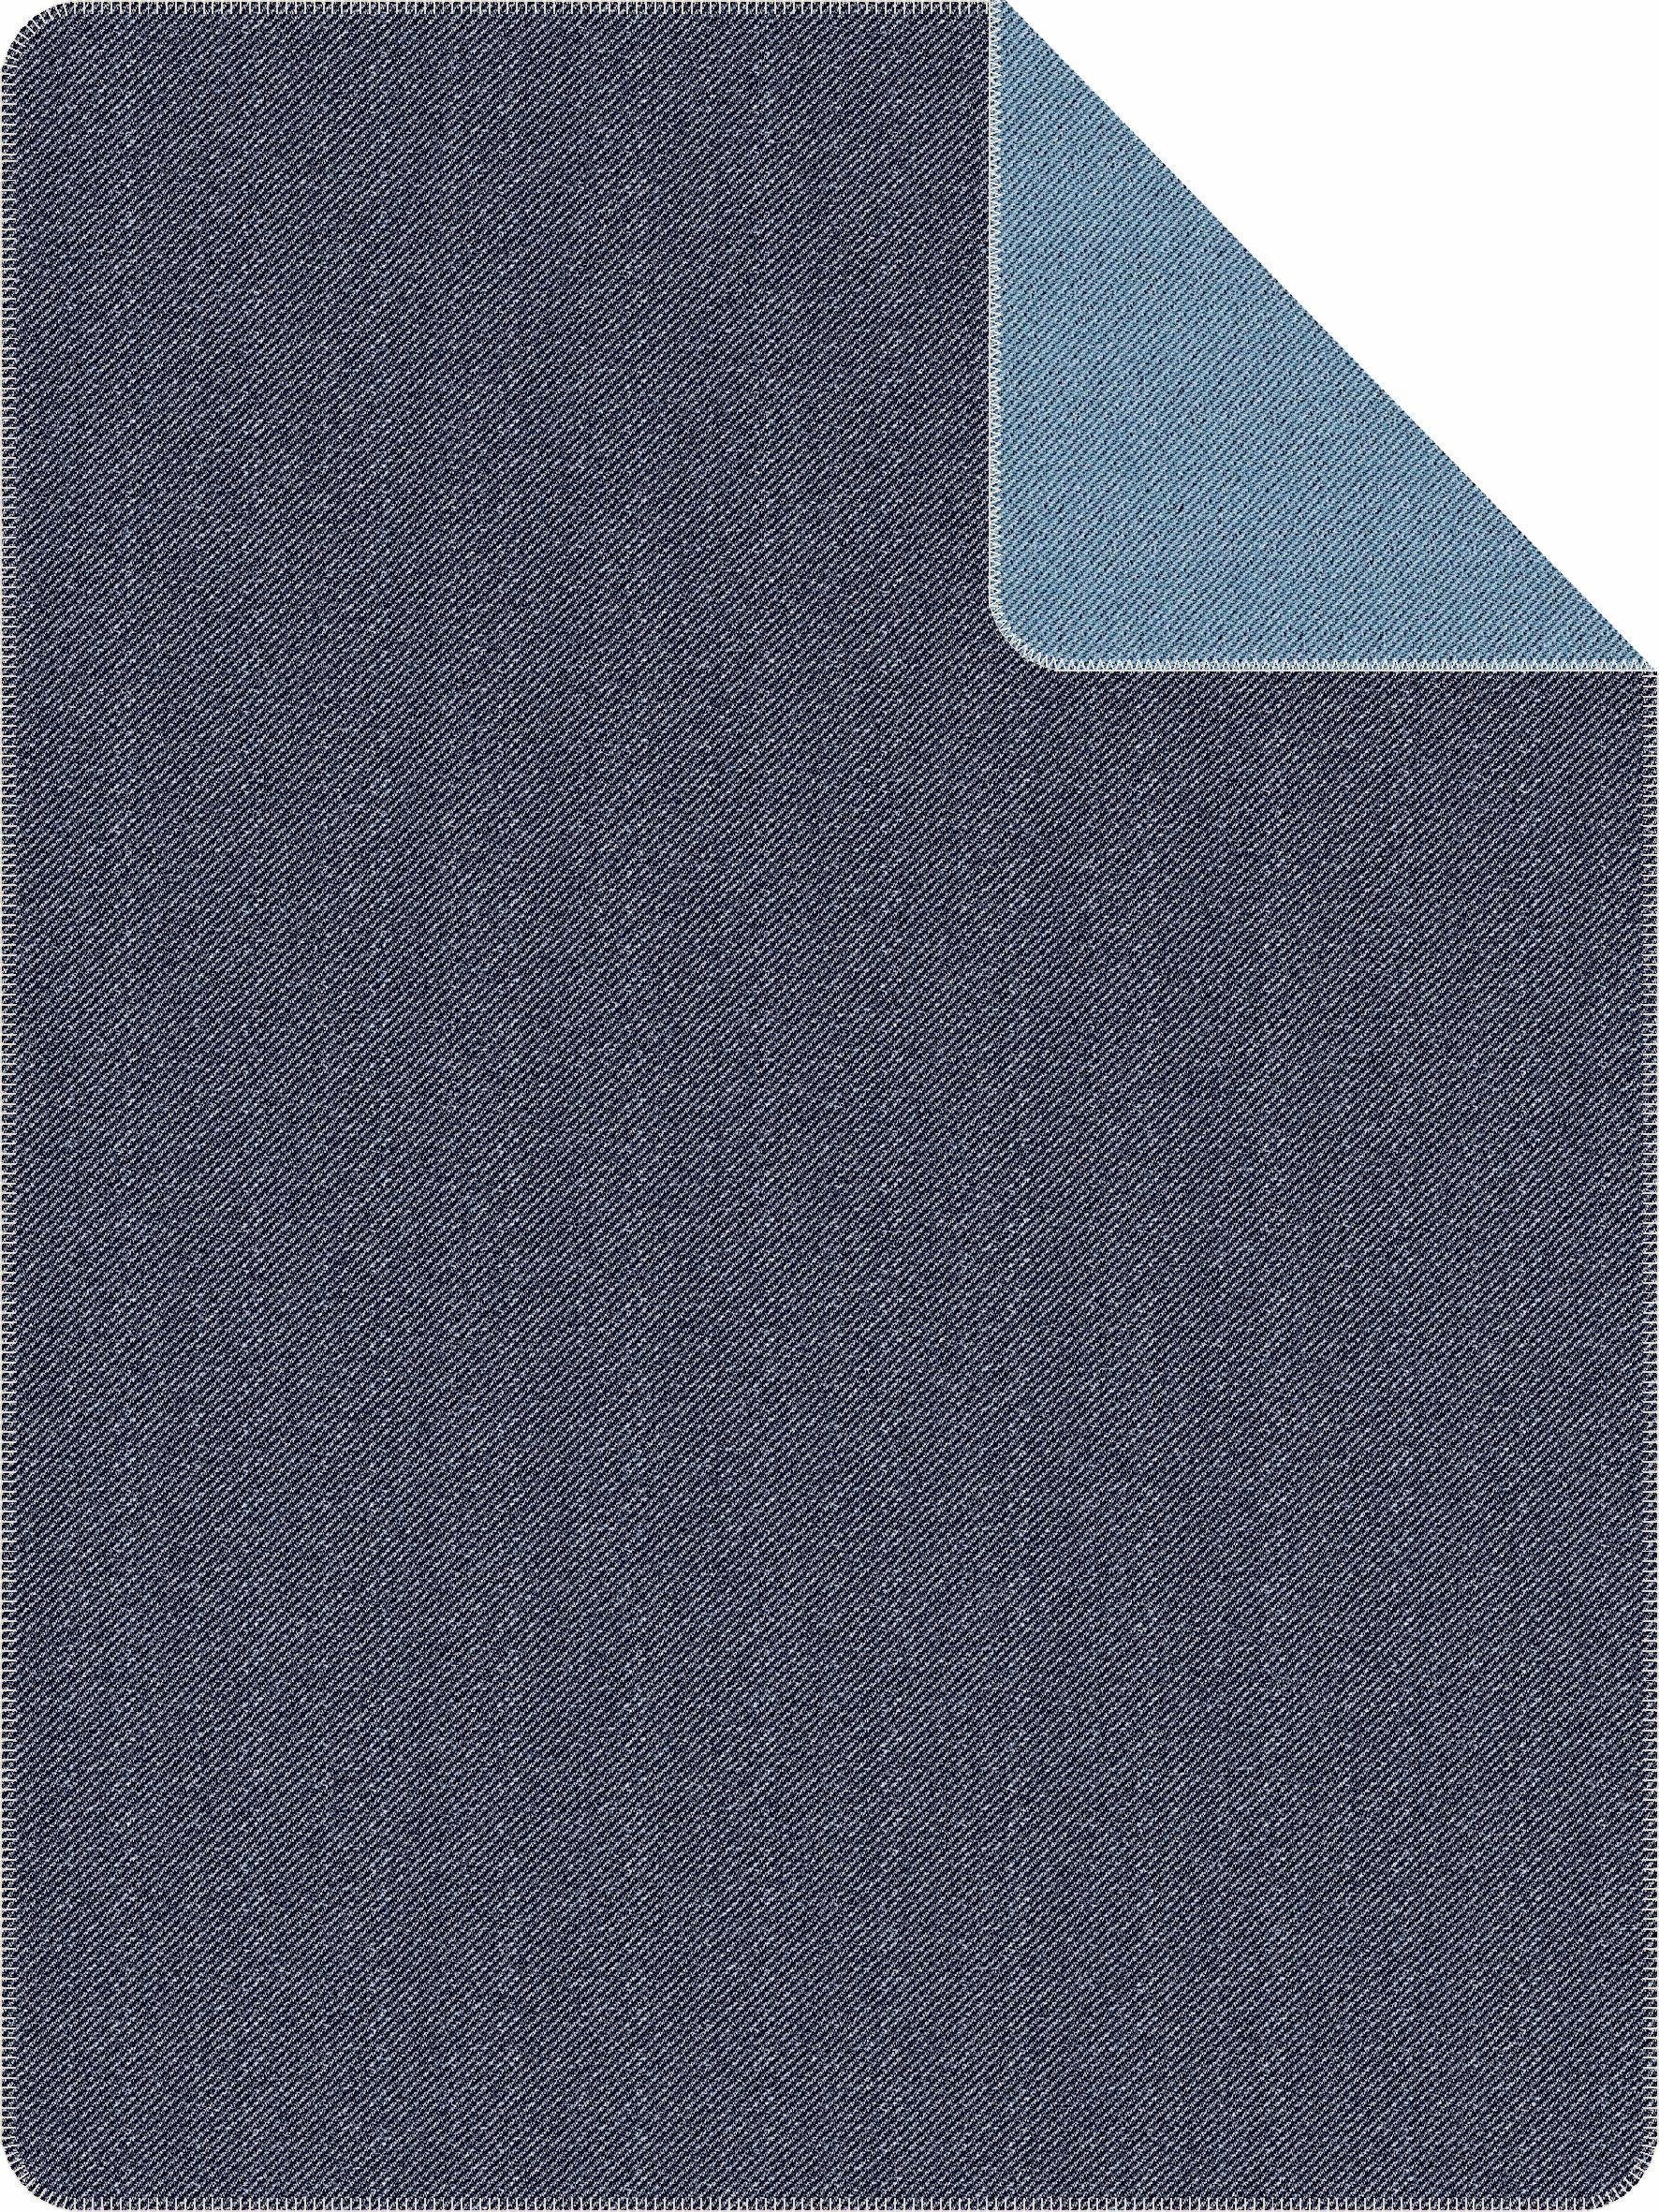 Wohndecke Haag, s.Oliver, Kuscheldecke in Optik, Doubleface blau